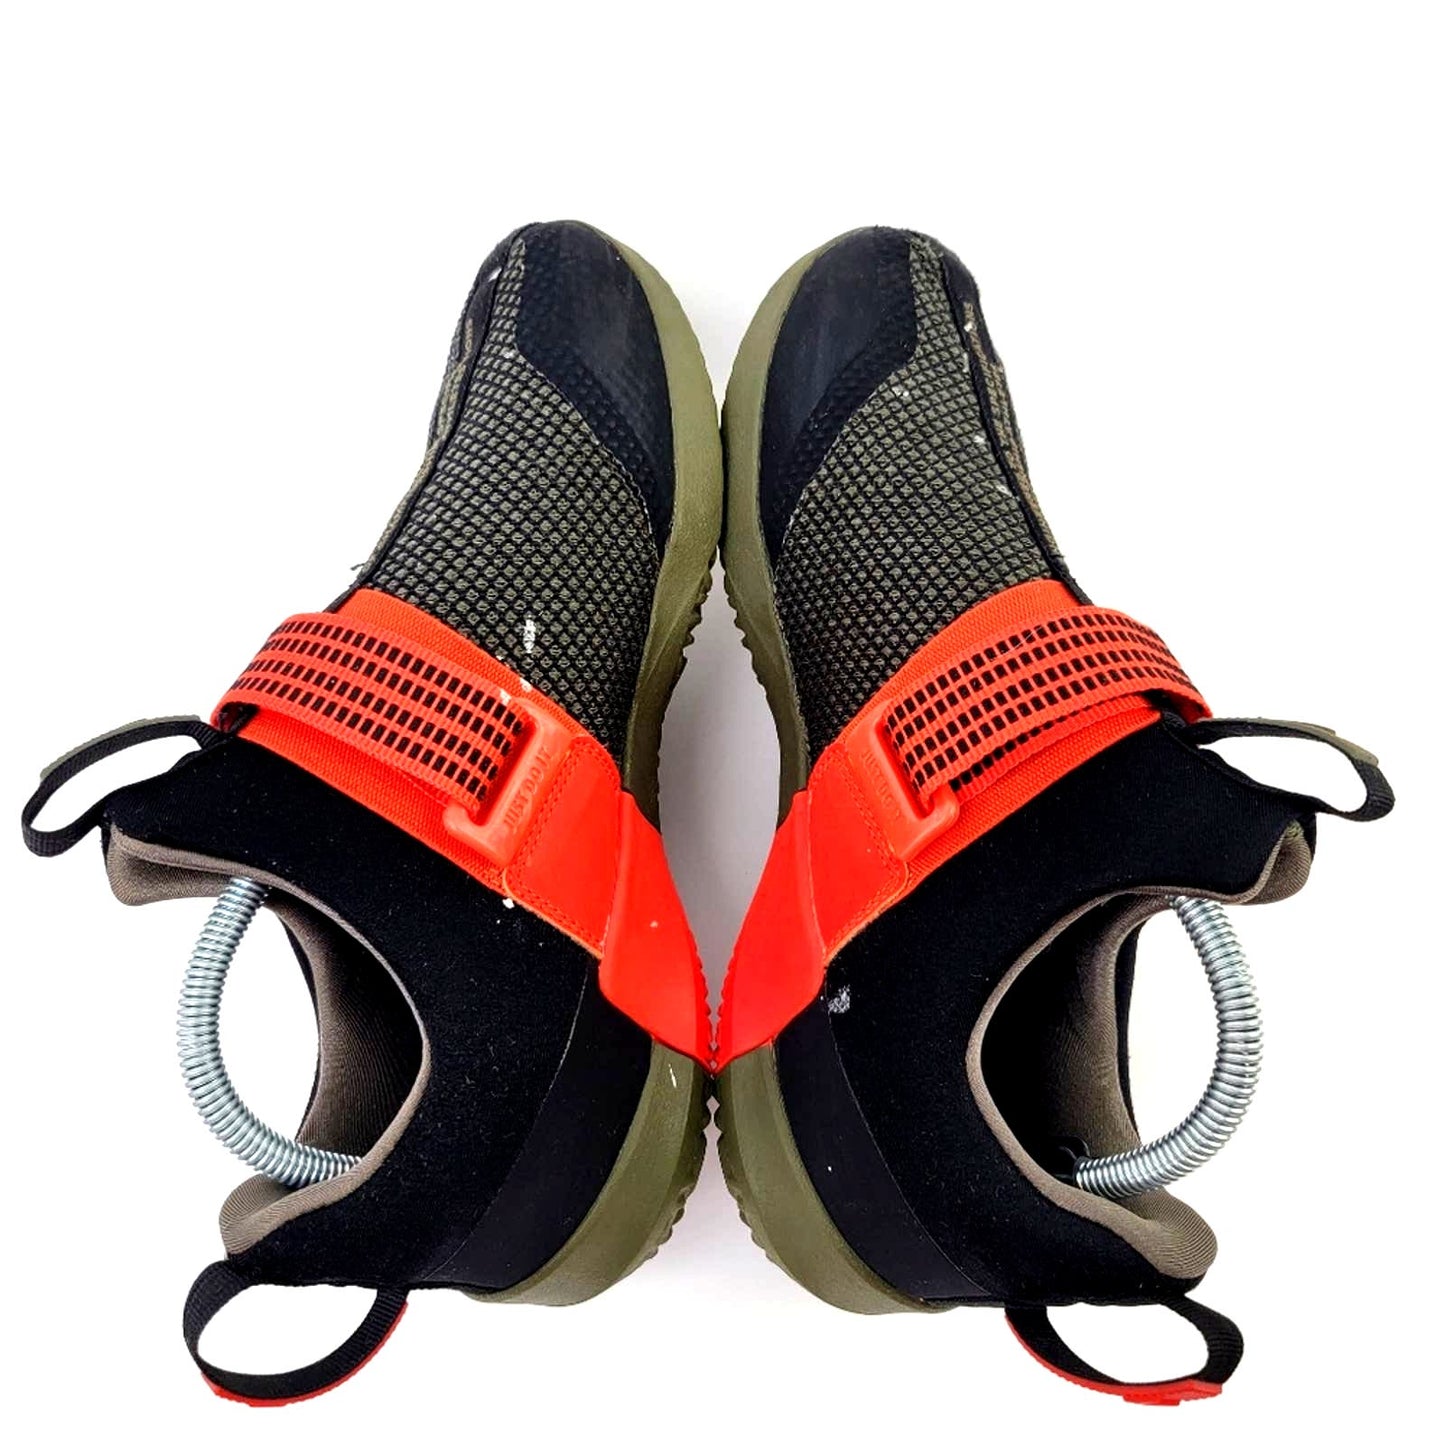 Nike Metcon Sport Tennis Running Shoes - 9